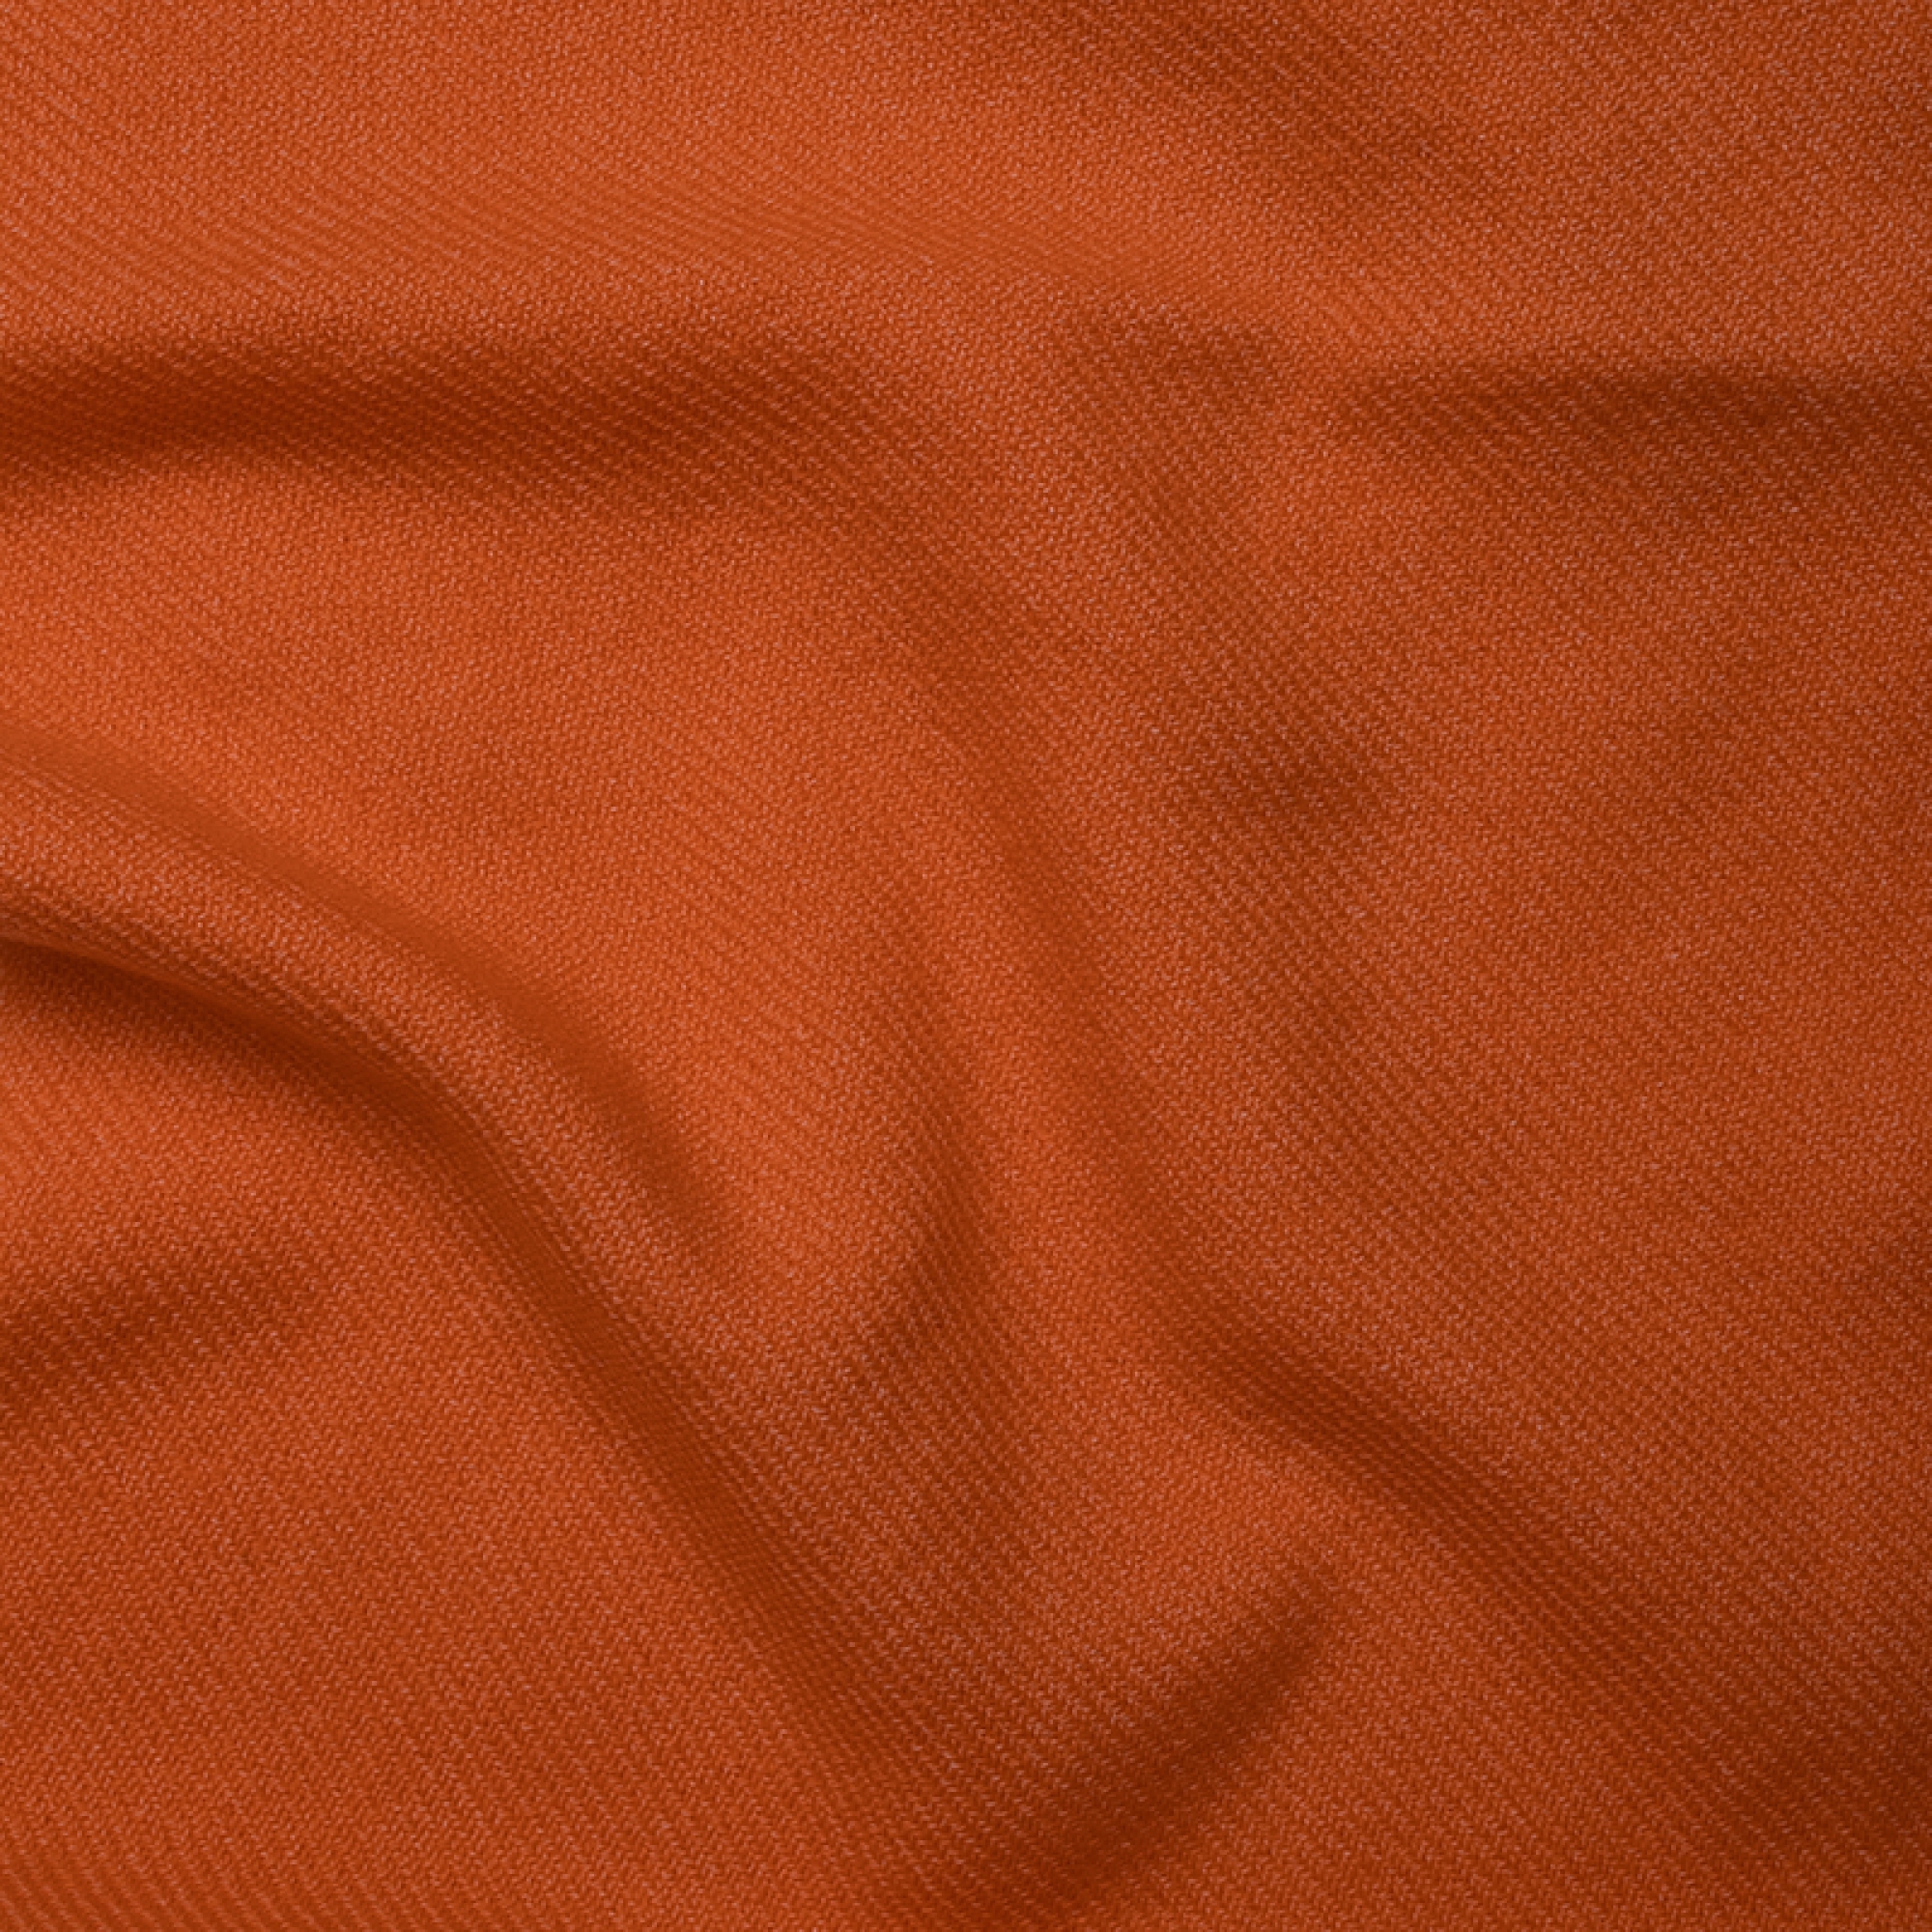 Cashmere uomo toodoo plain s 140 x 200 arancio 140 x 200 cm